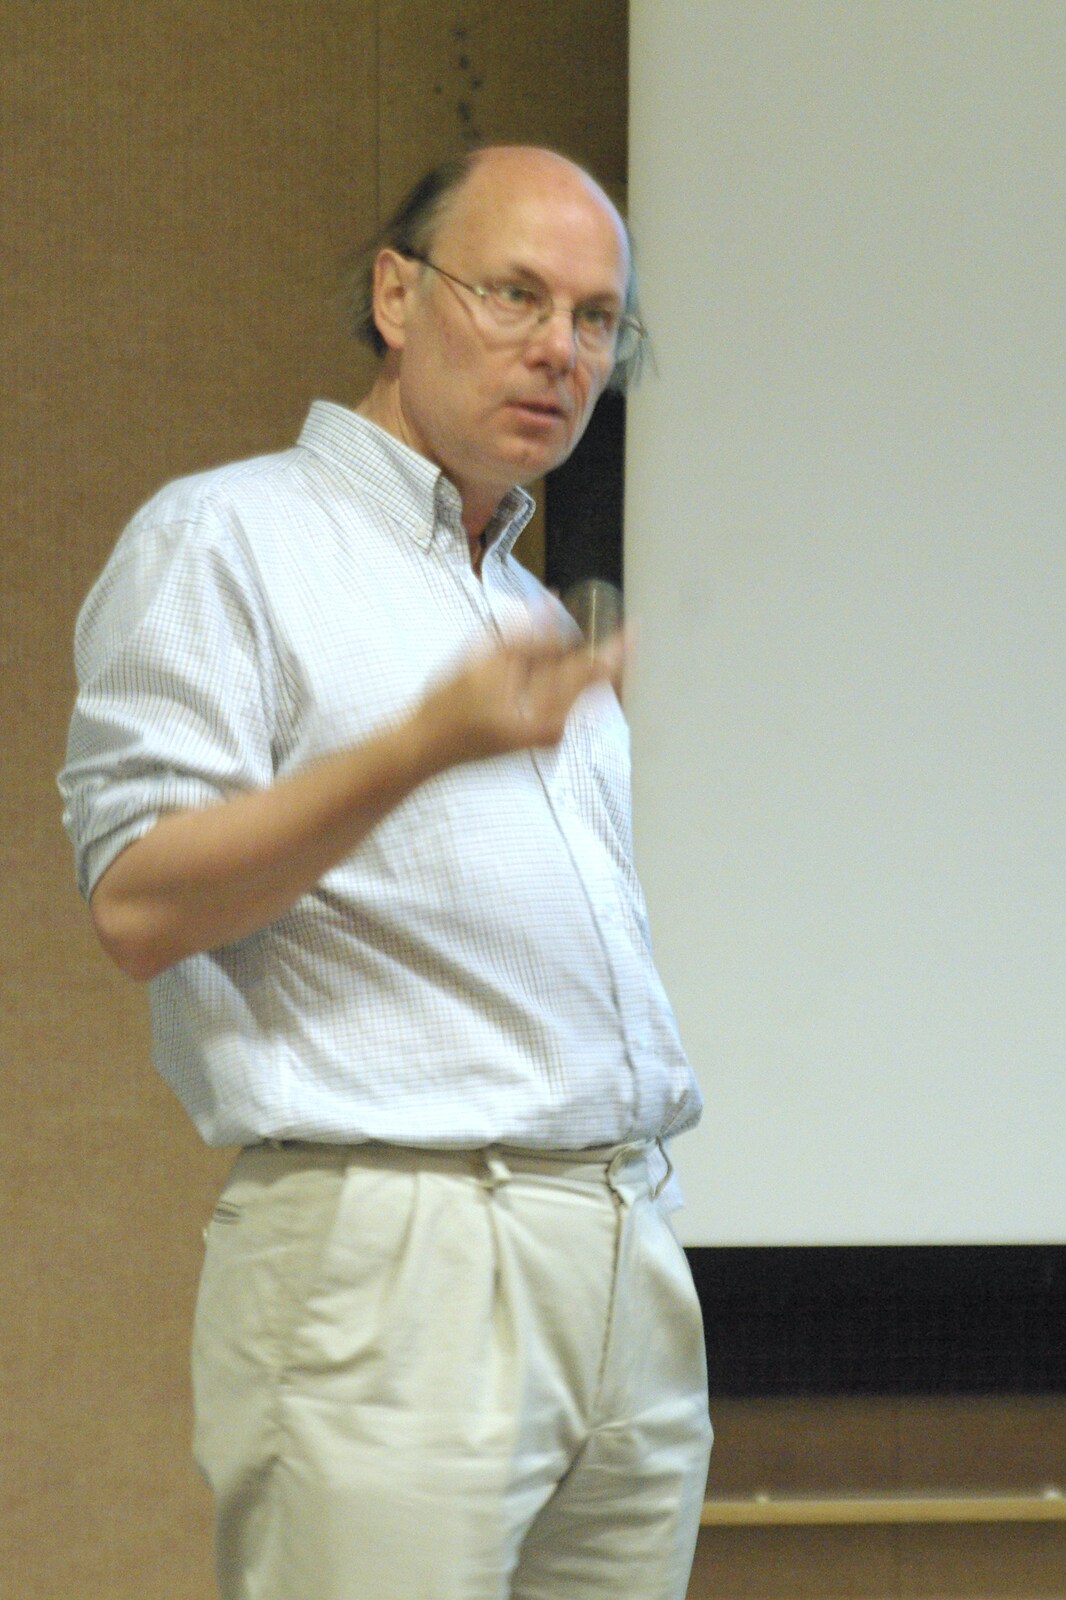 Bjarne Stroustrup, the inventor of C++ from Science Park Demolition, Bjarne Stroustrup, and Taptu/Qualcomm Miscellany, Cambridge - 29th April 2007